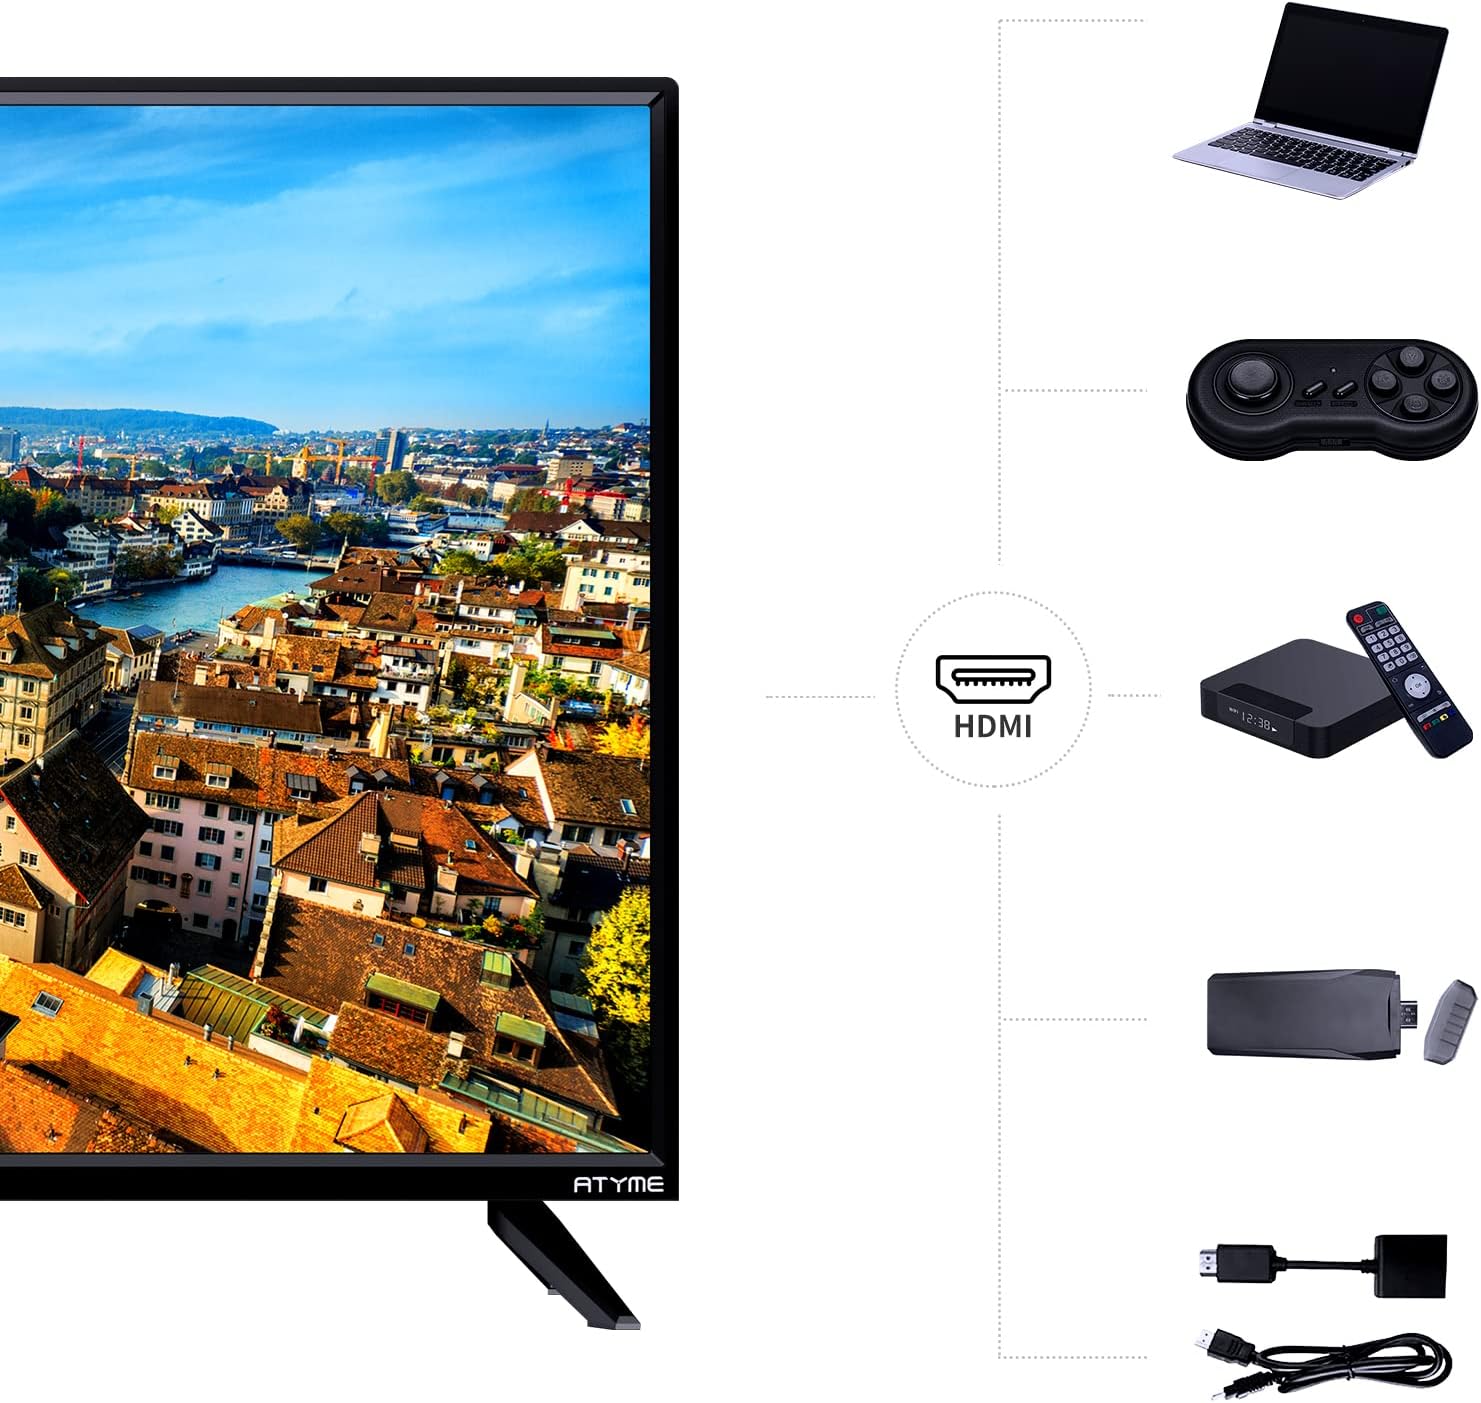 ATYME 32-inch Class 60Hz 720p HD LED TV Flat Screen 1*USB 3* HDMI 1*VGA ARC Dual Channel 8W Speakers Monitor Television 320GM5HD